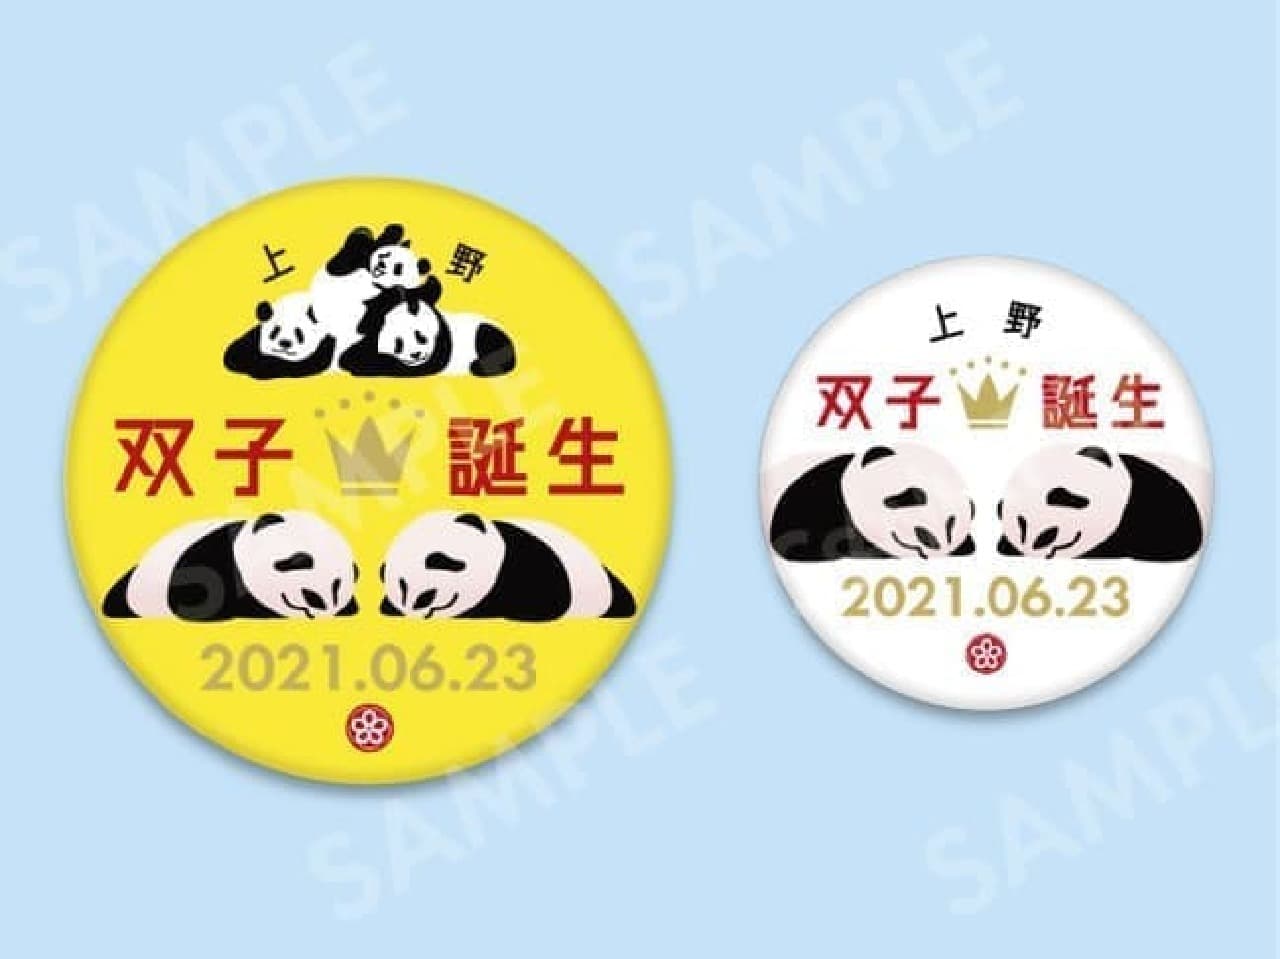 Ueno Information Center "Ueno Panda Family Leg Glass" is on sale! With a bonus of "Baby Panda Birth Commemorative Coaster"